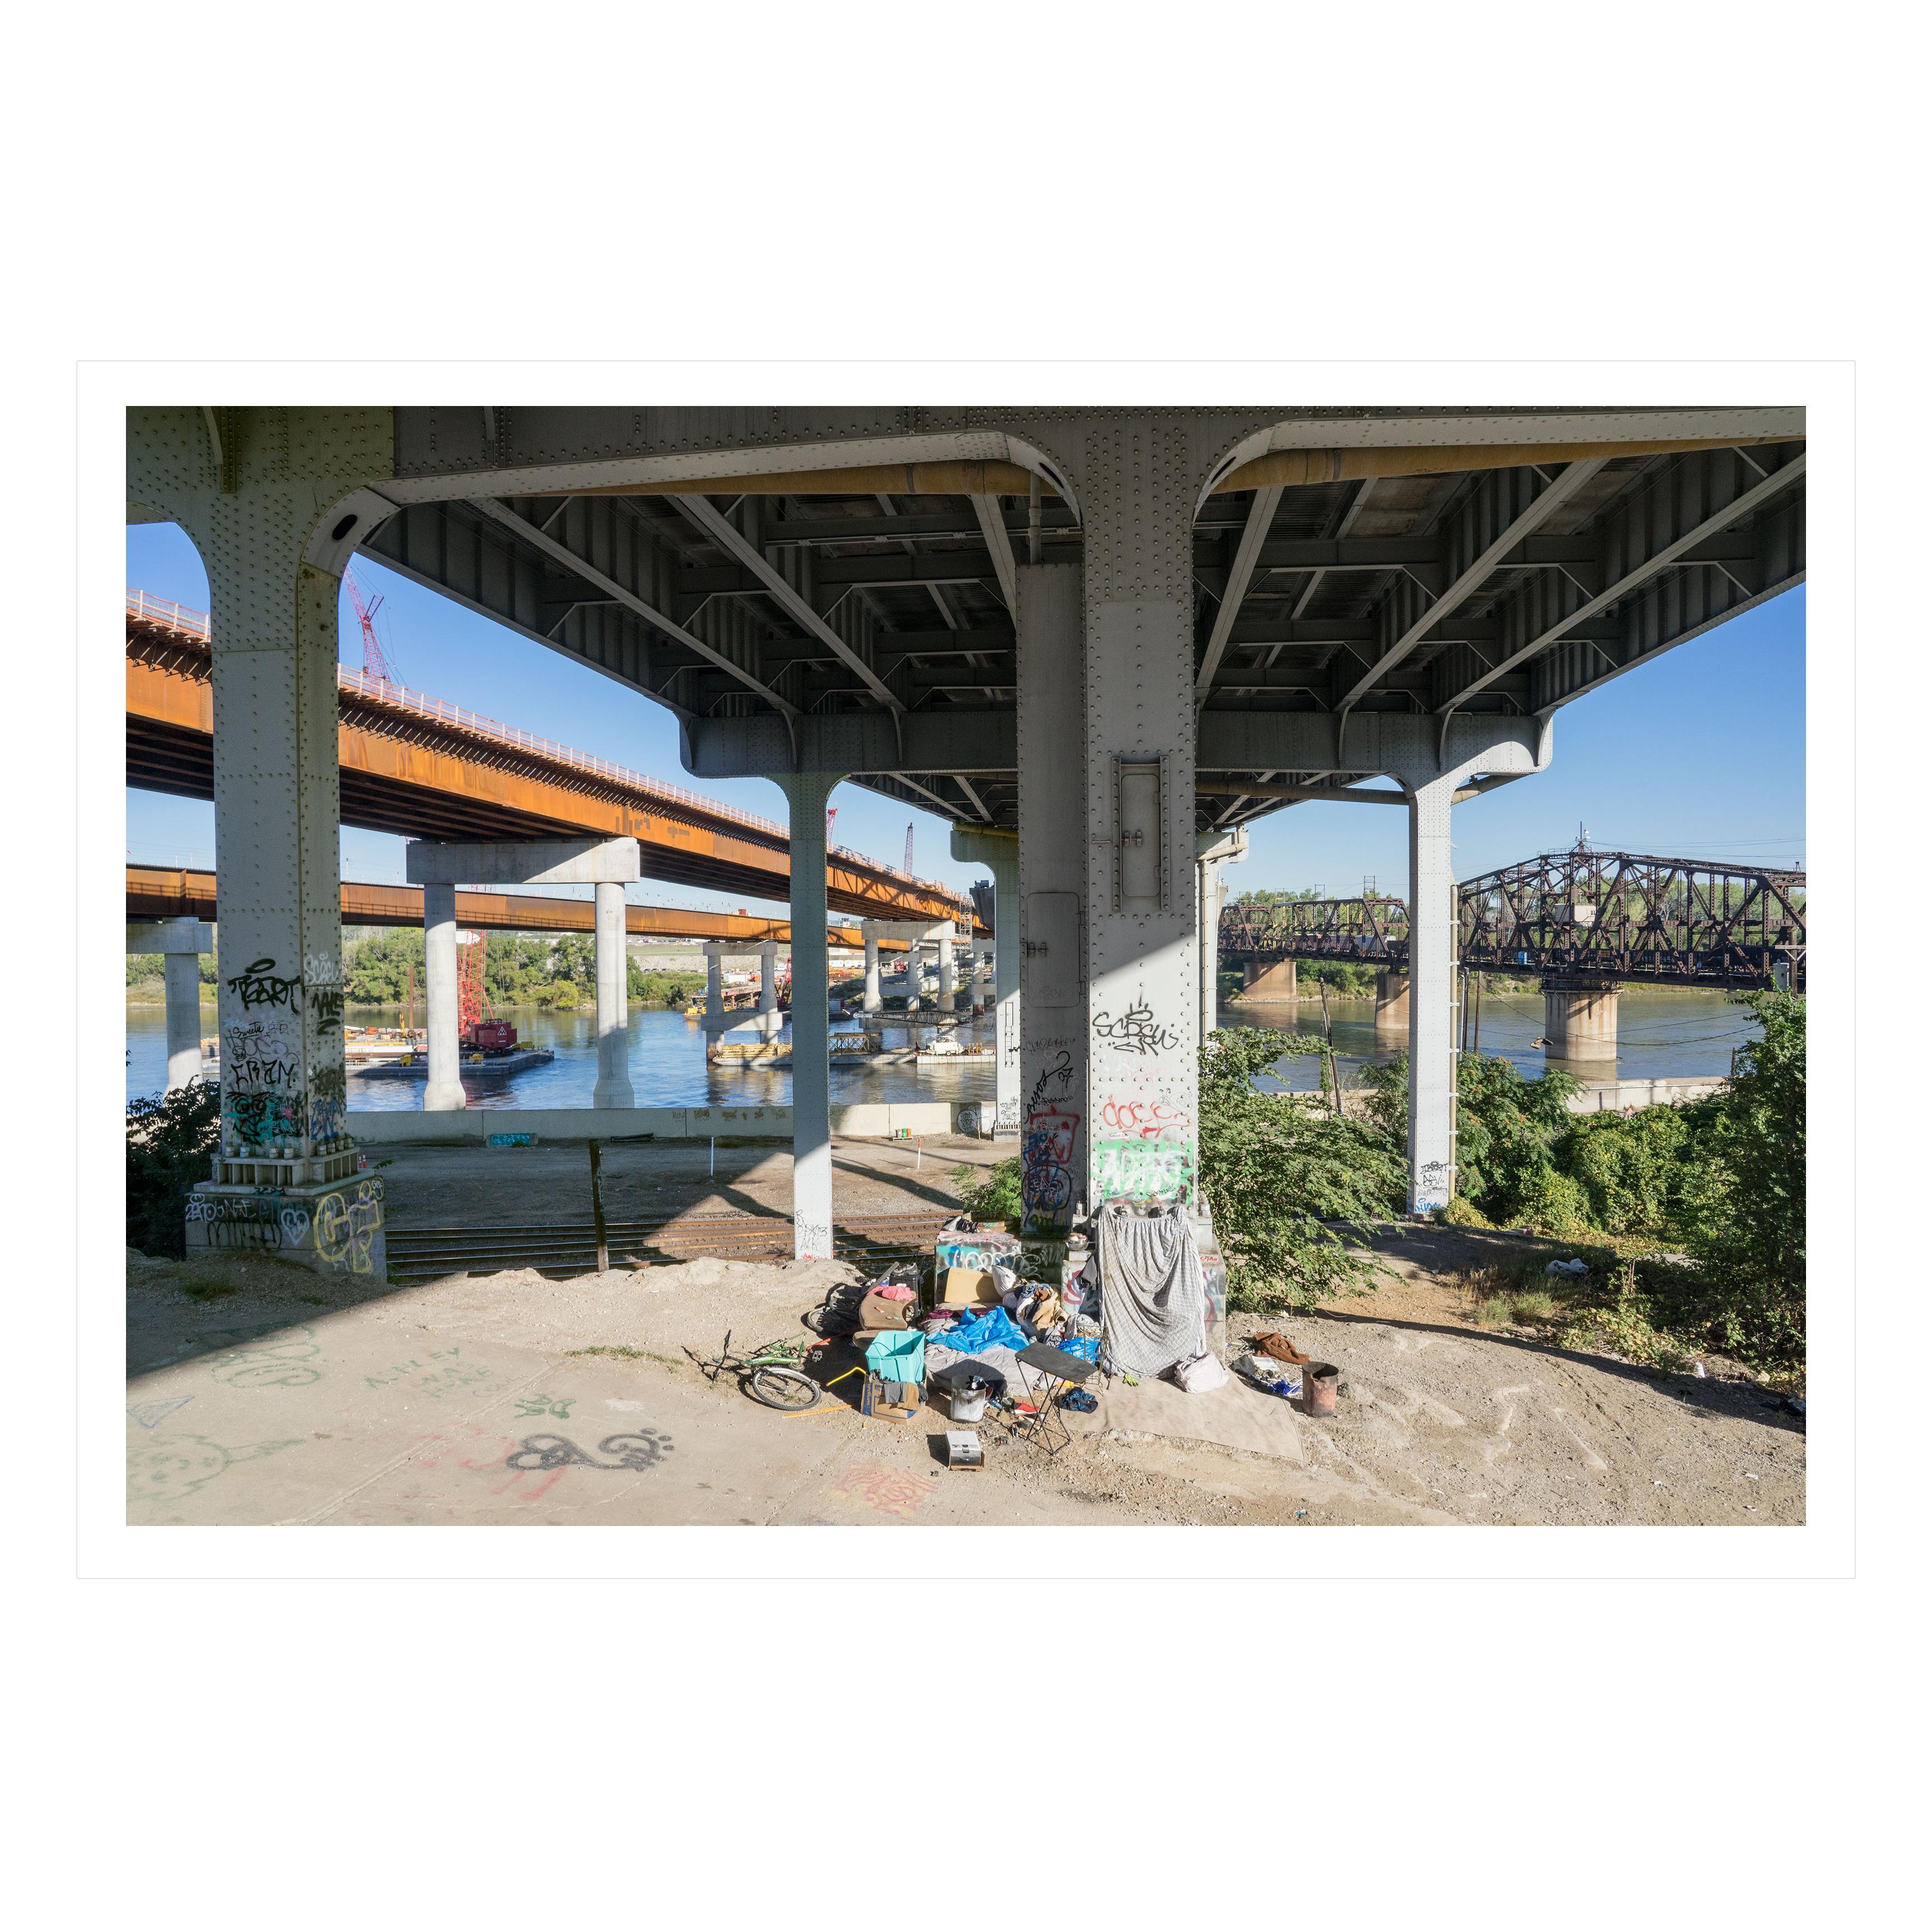 Under the Buck O’Neil Bridge - Photograph by Jeff Burk